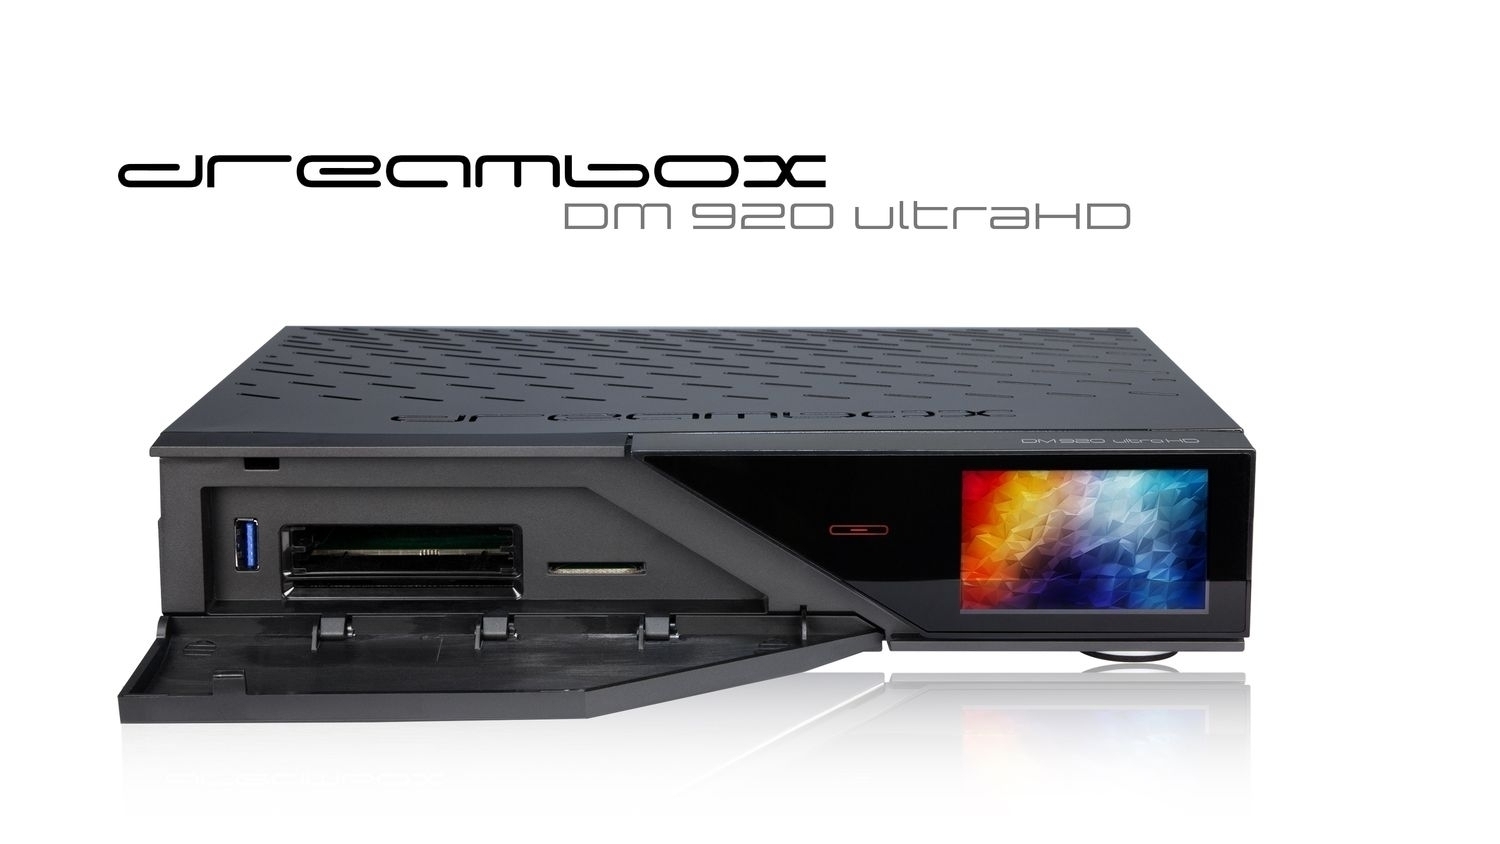 Dreambox DM920 UHD 4K 1x DVB-C/T2 Dual Tuner E2 Linux PVR Receiver